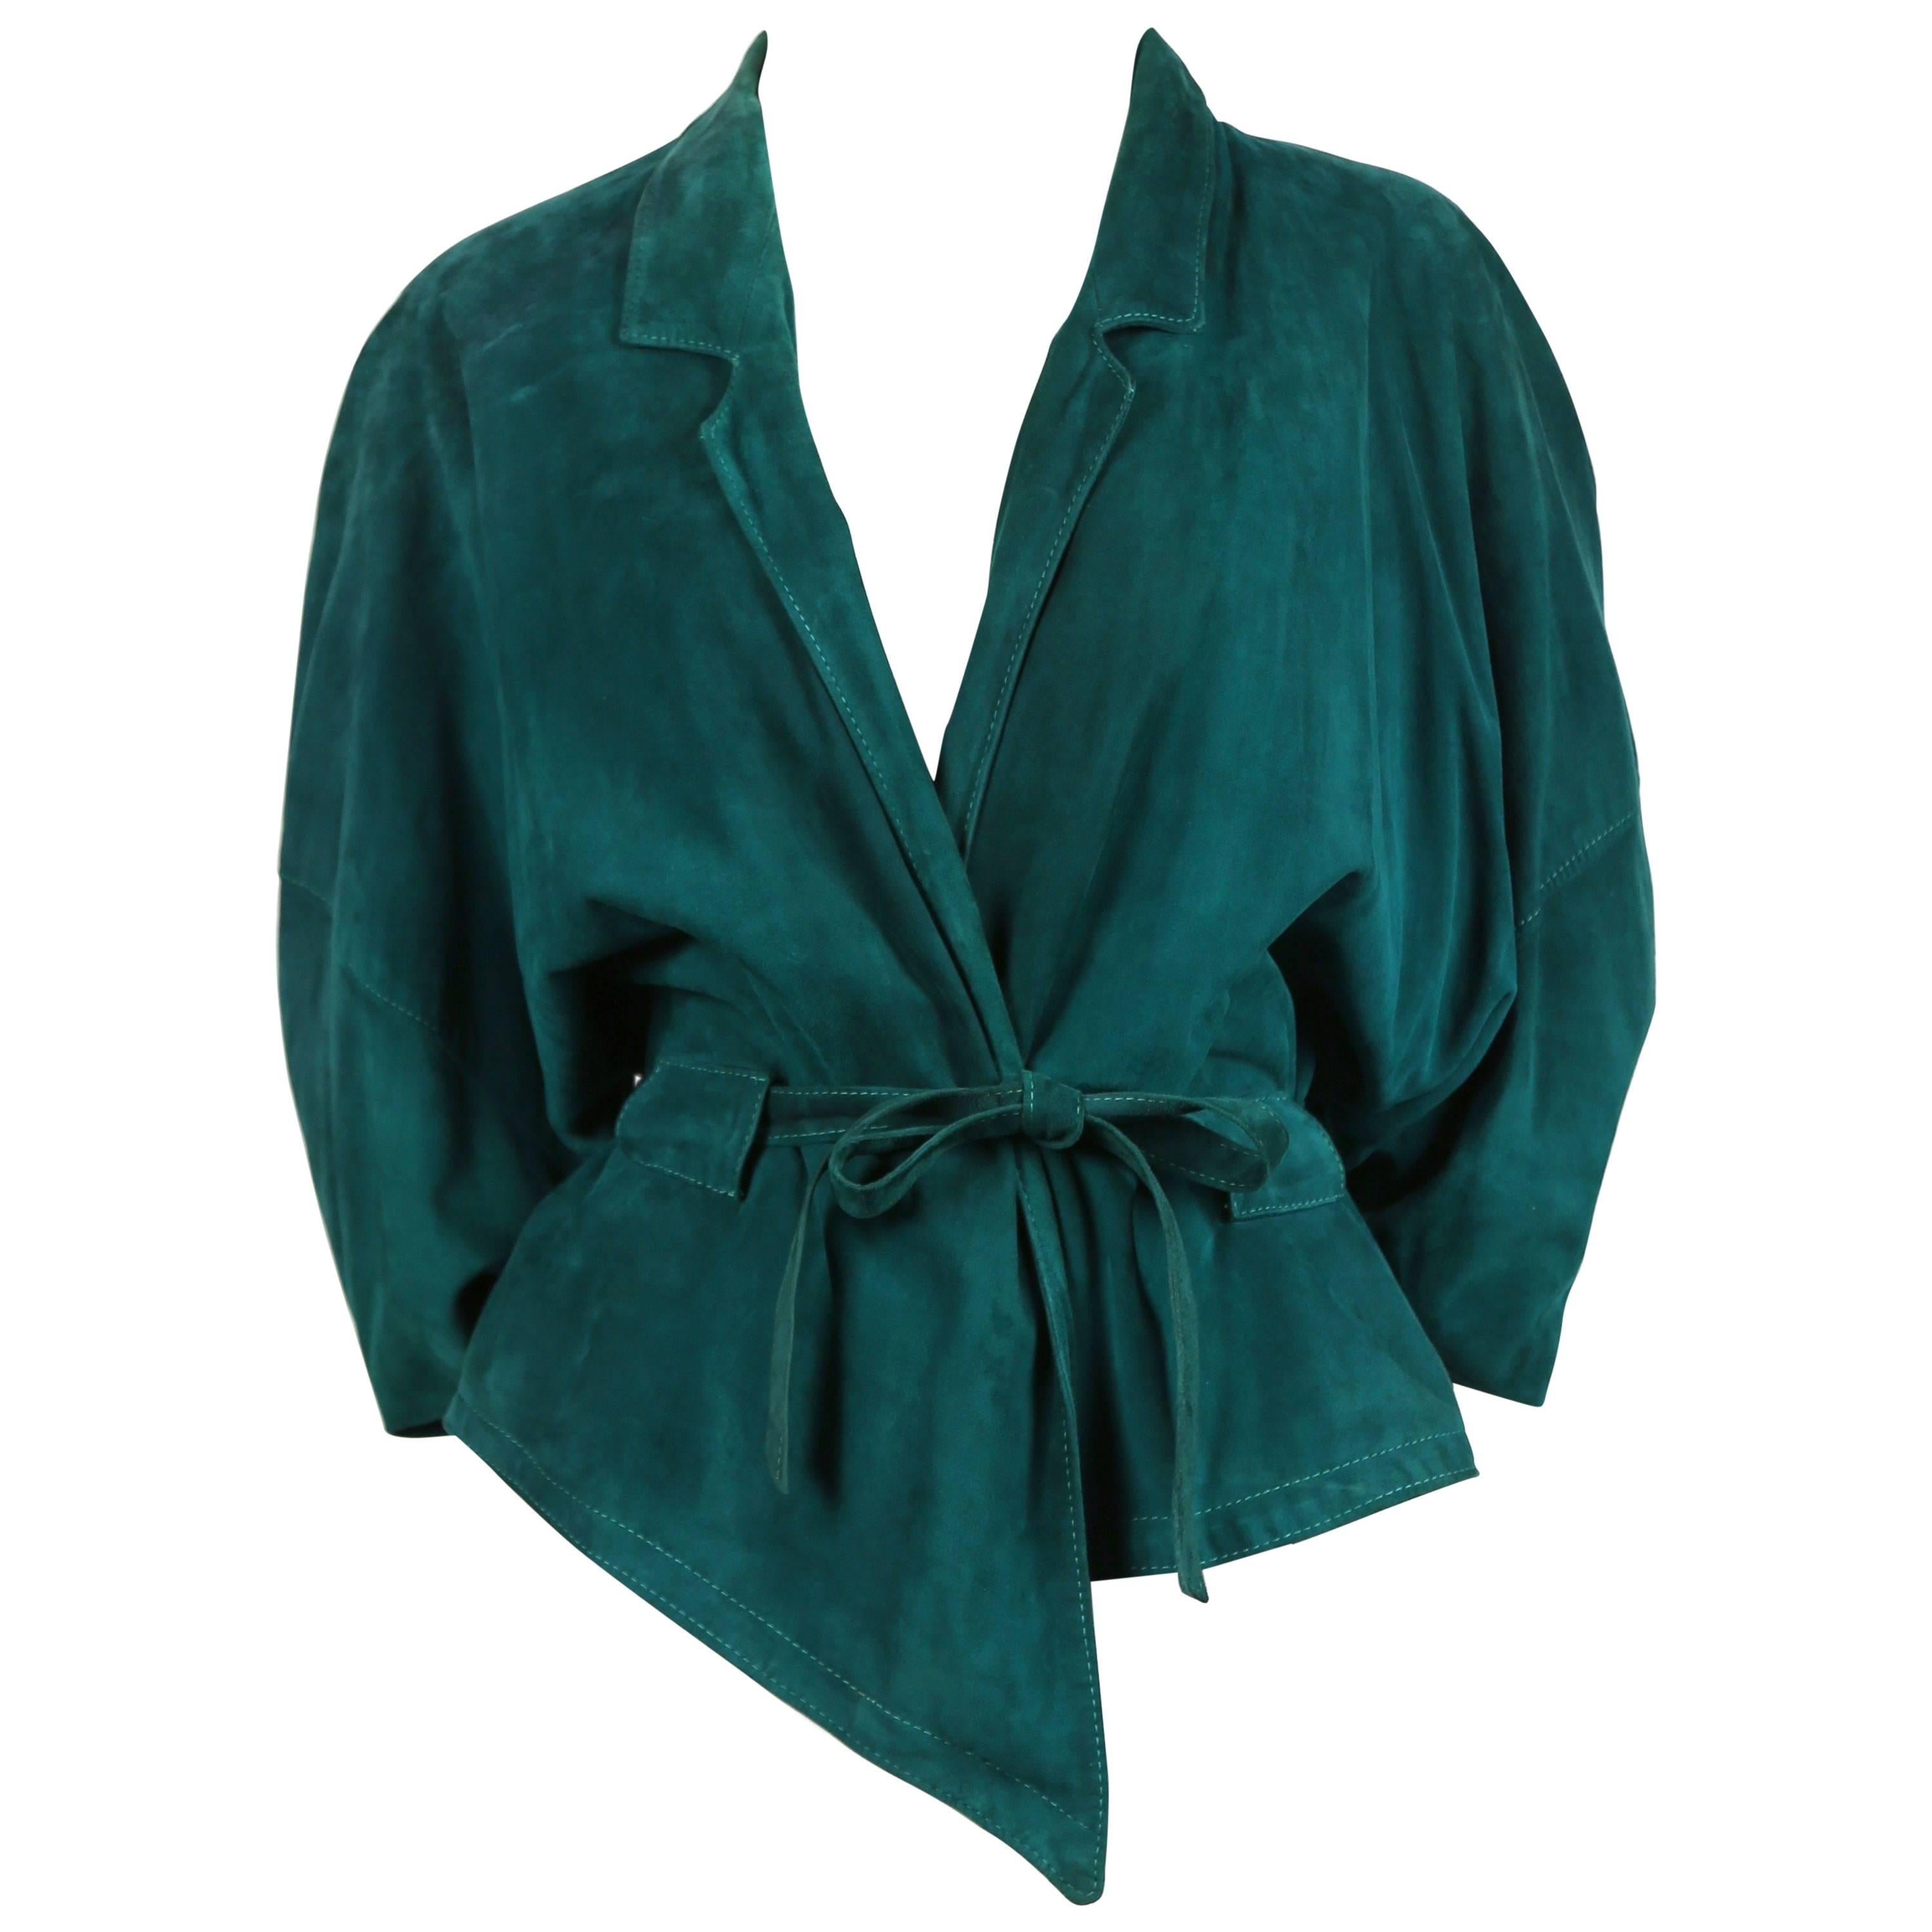 1980's JEAN-CLAUDE JITROIS emerald green draped suede jacket